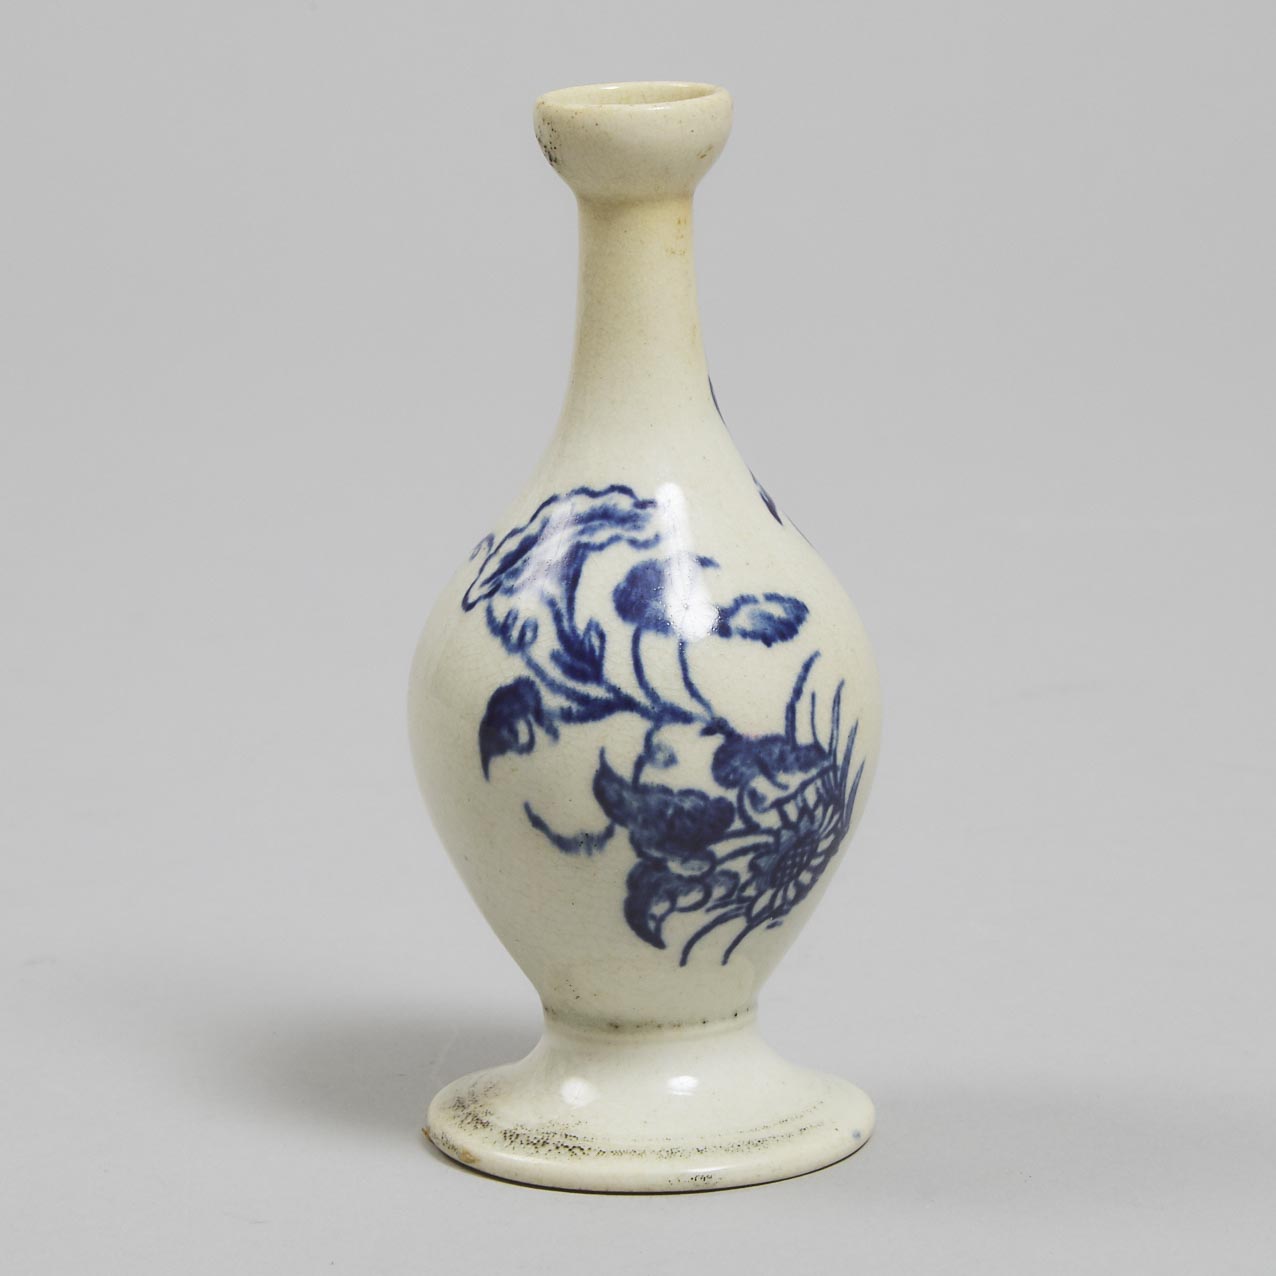 Pennington's Liverpool Small Vase, c.1780